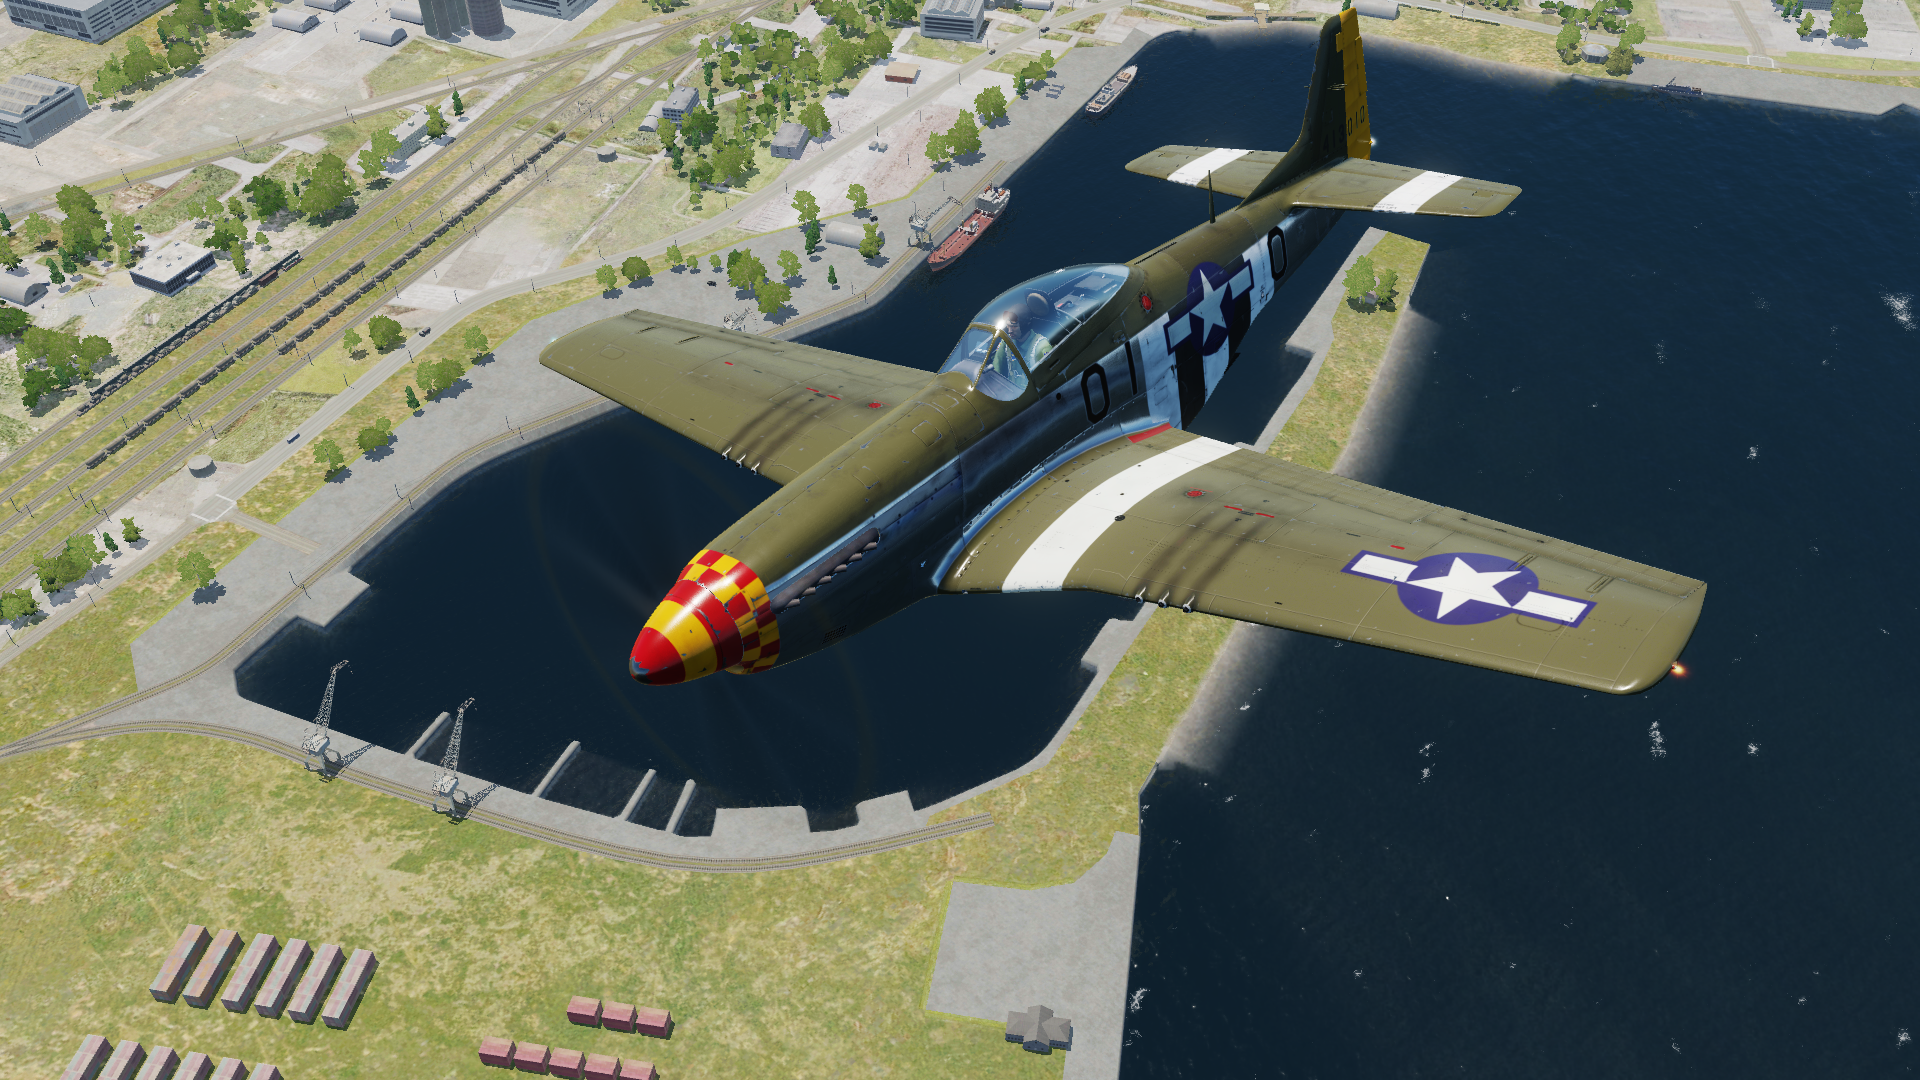 General 1920x1080 Digital Combat Simulator North American P-51 Mustang aircraft airplane video games military vehicle PC gaming screen shot vehicle military aircraft